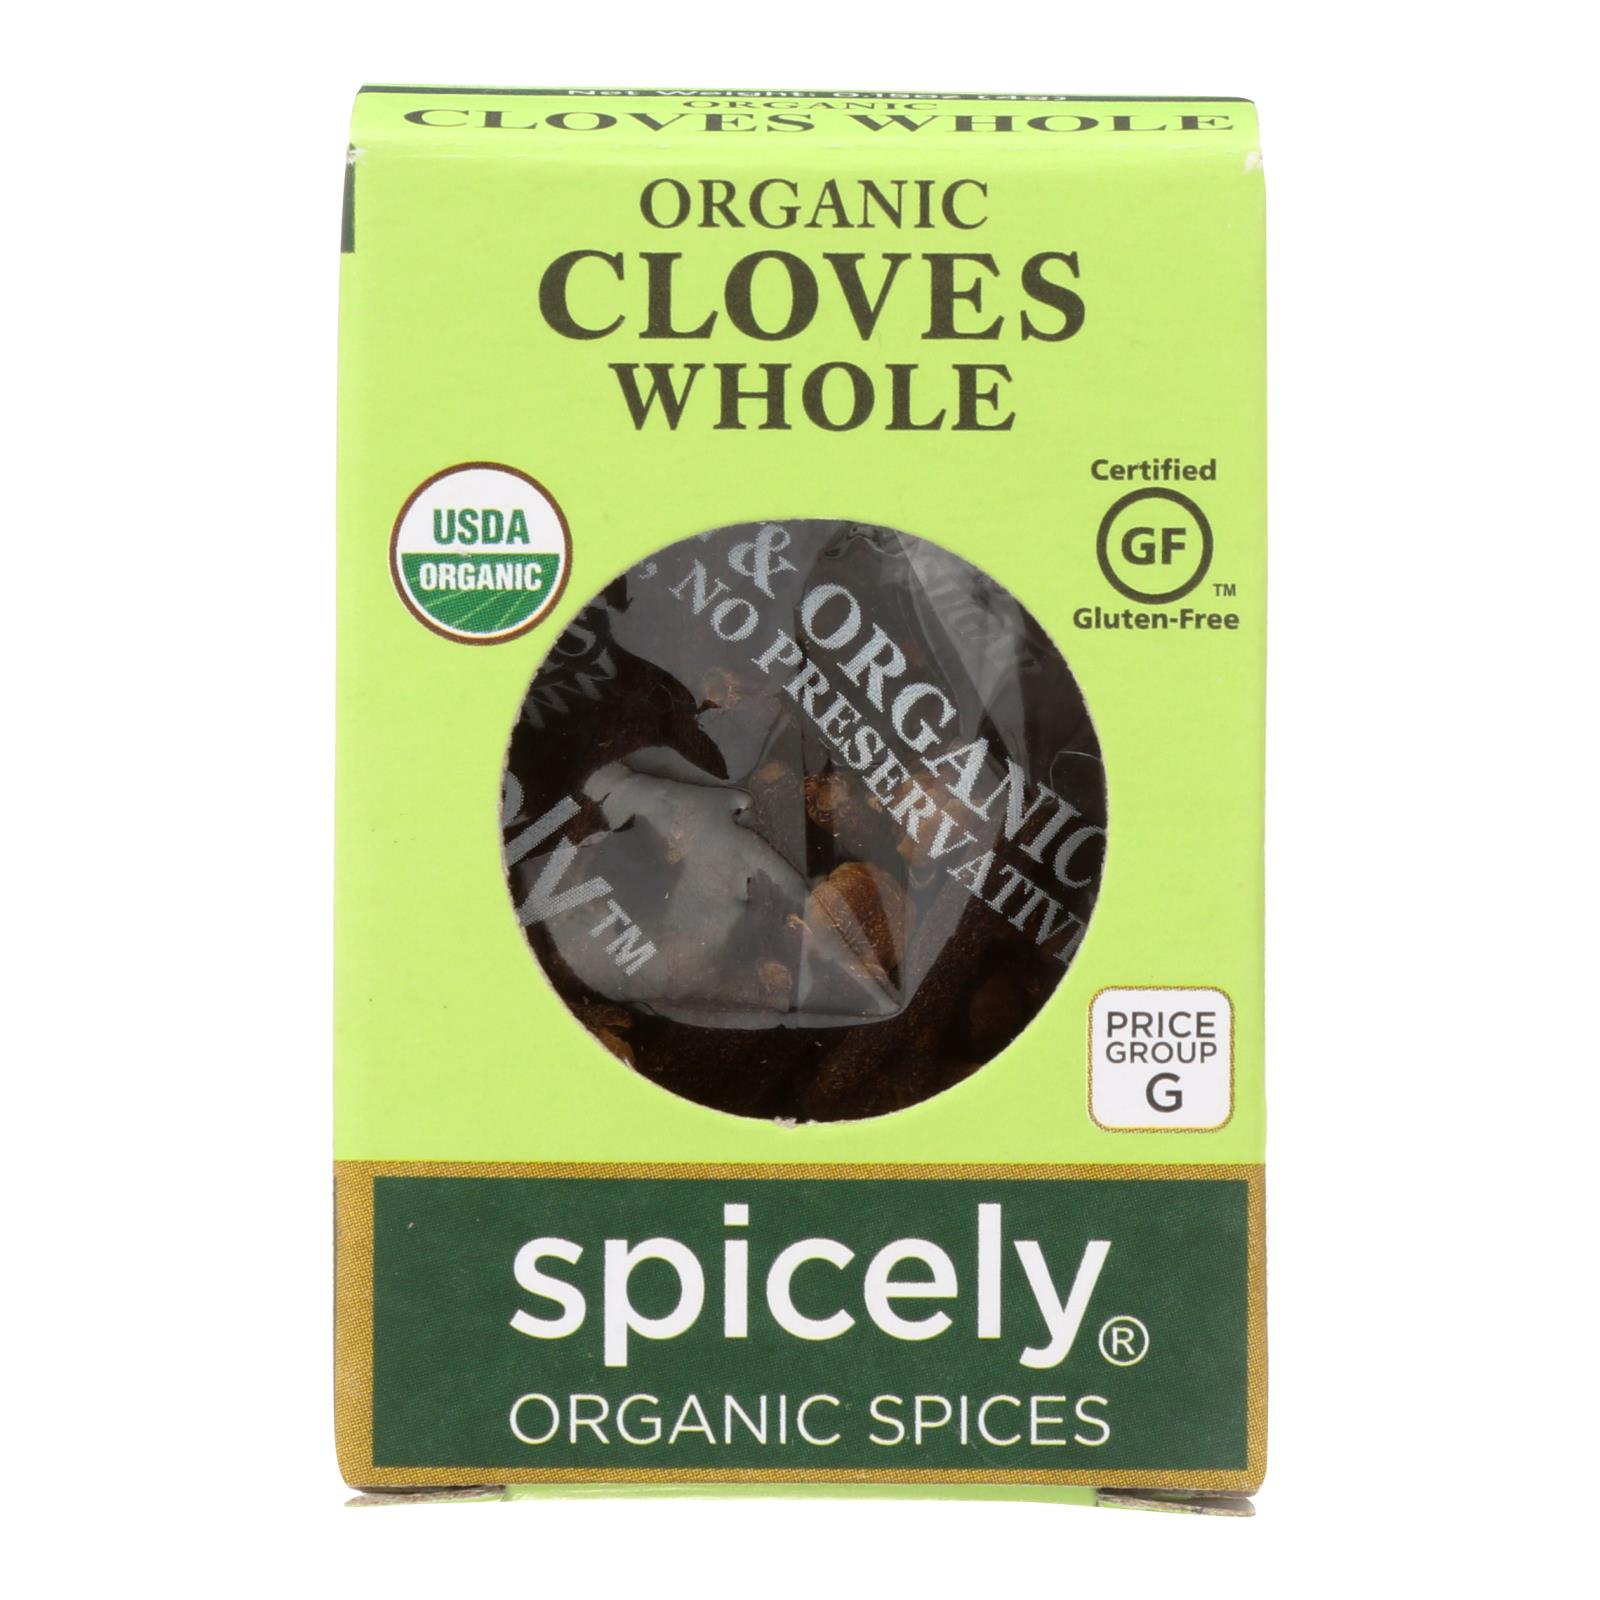 Spicely Organics - Organic Cloves - Whole - 6개 묶음상품 - 0.15 oz.